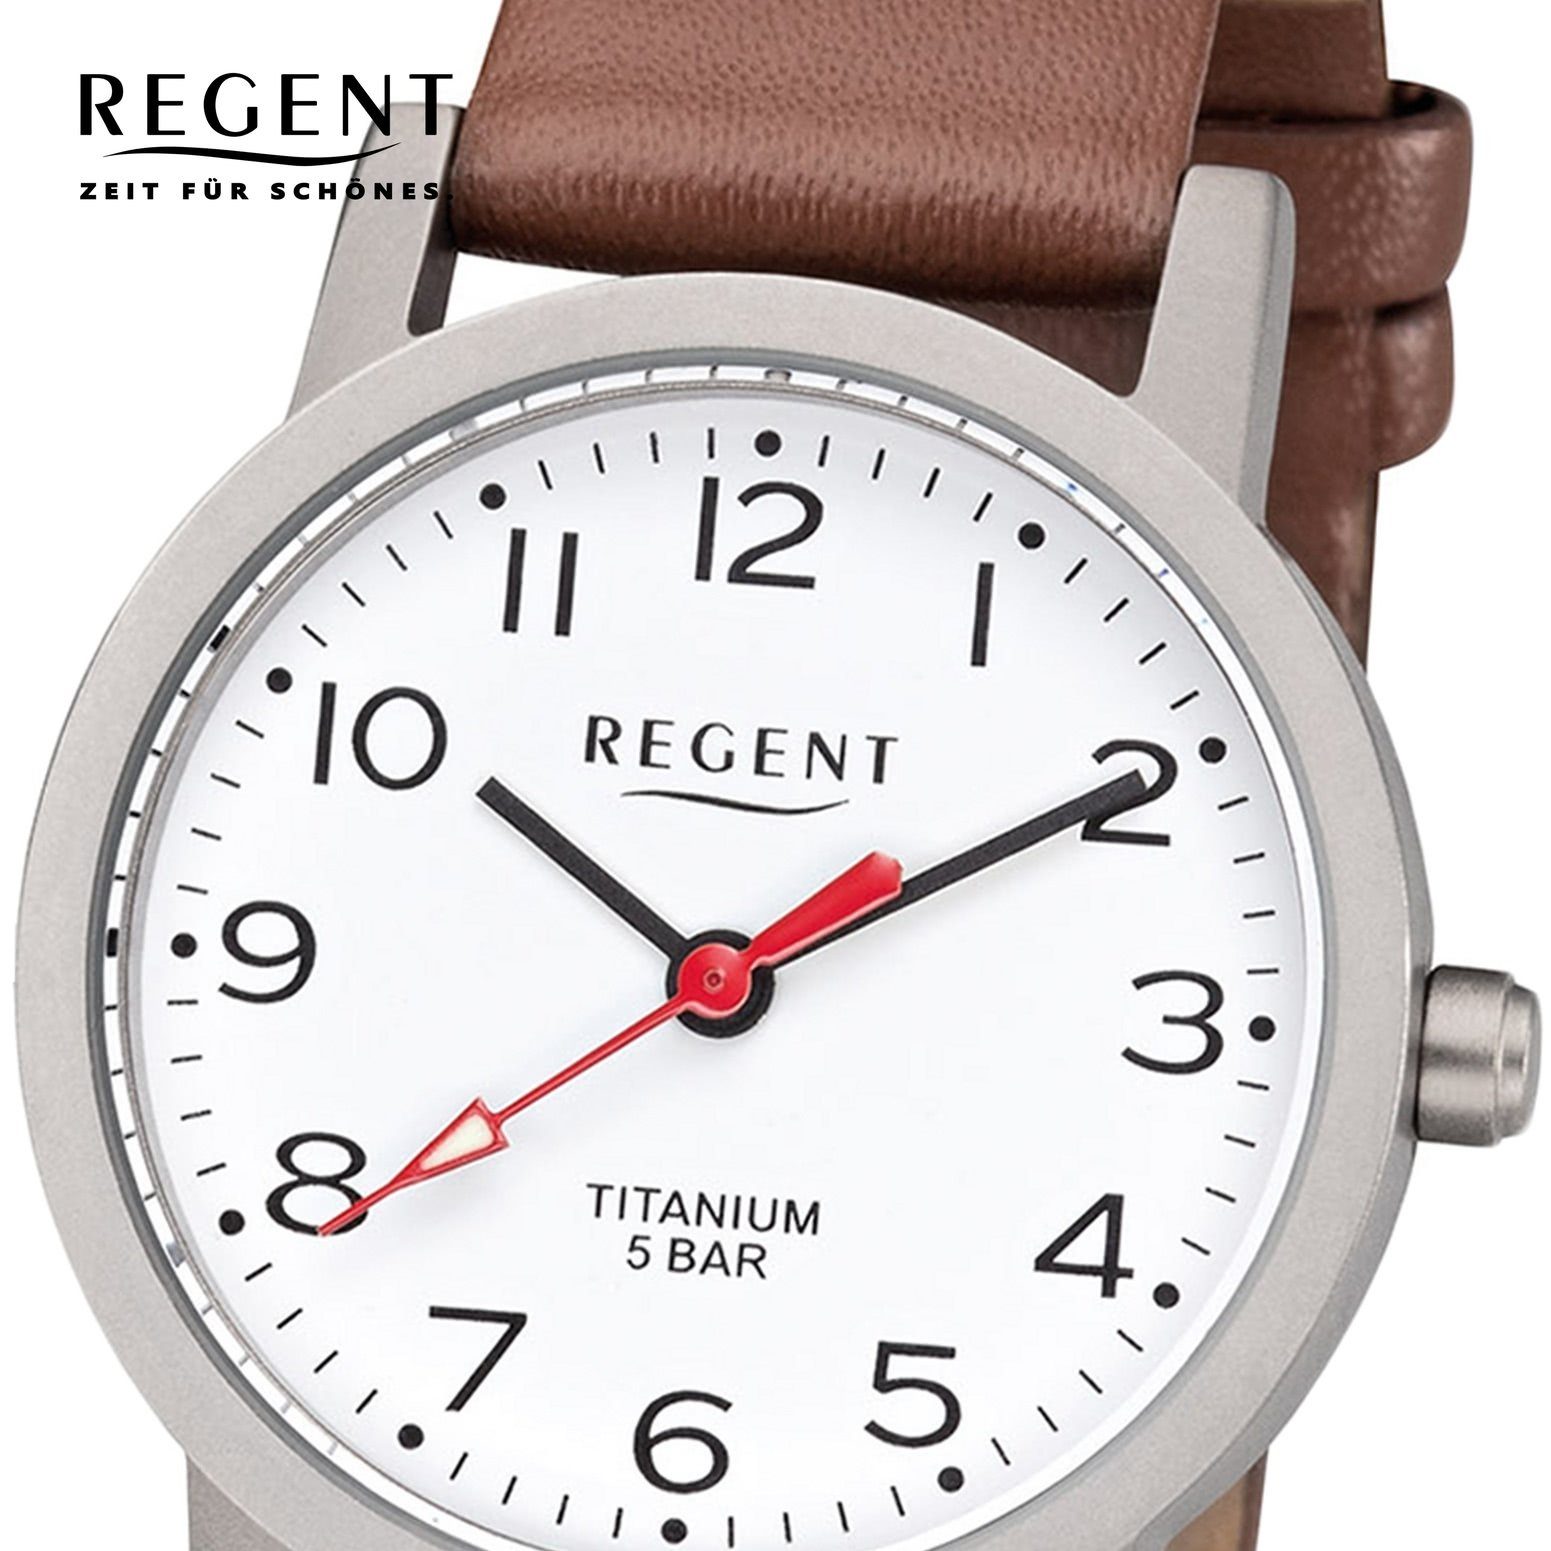 Damen 27mm), Armbanduhr Quarzwerk, Uhr F-1213 rund, Lederarmband Quarzuhr Regent klein Regent (ca. Damen Leder